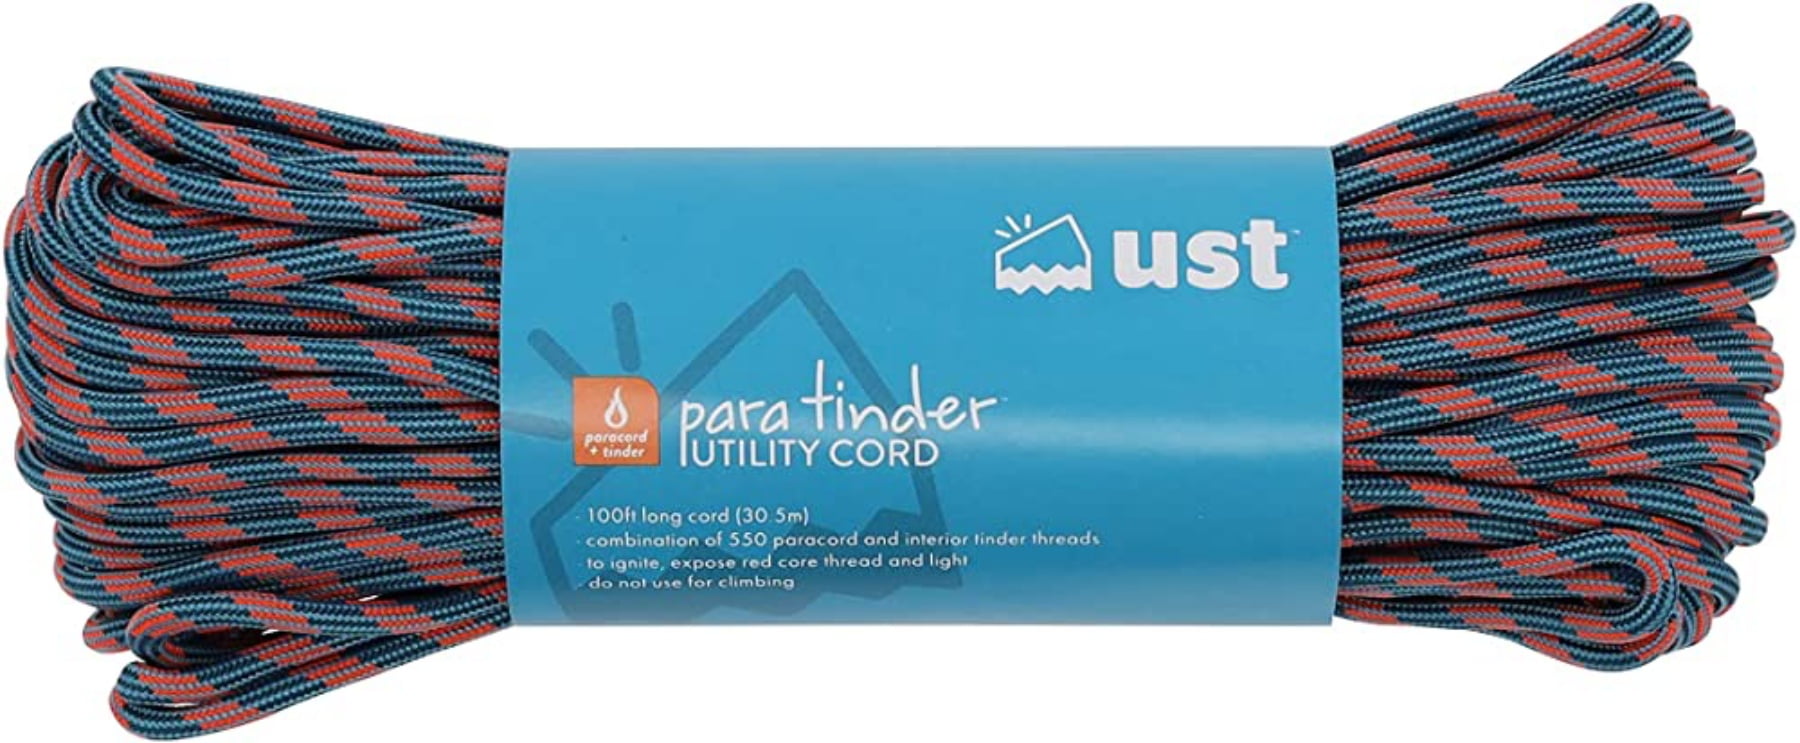 UST ParaTinder Utility Cord, 100